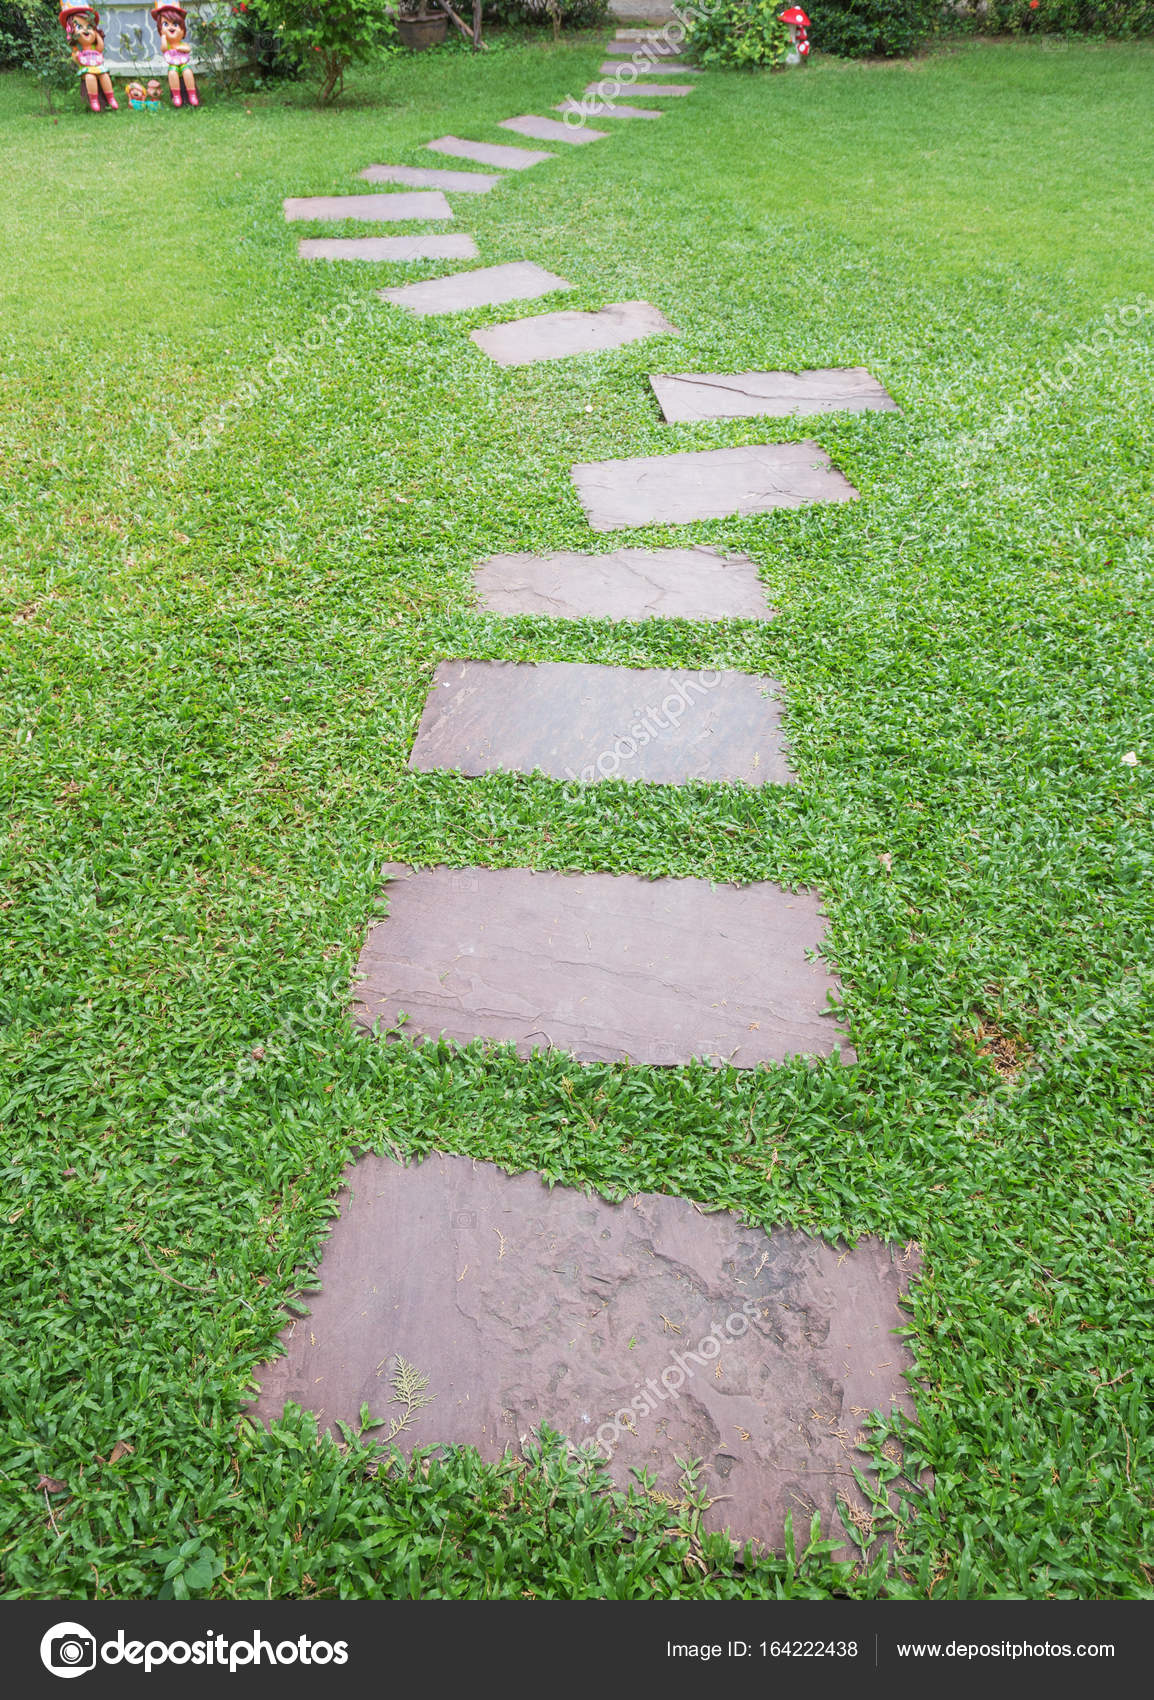 stone walk way between grass — Stock Photo © geargodz #164222438